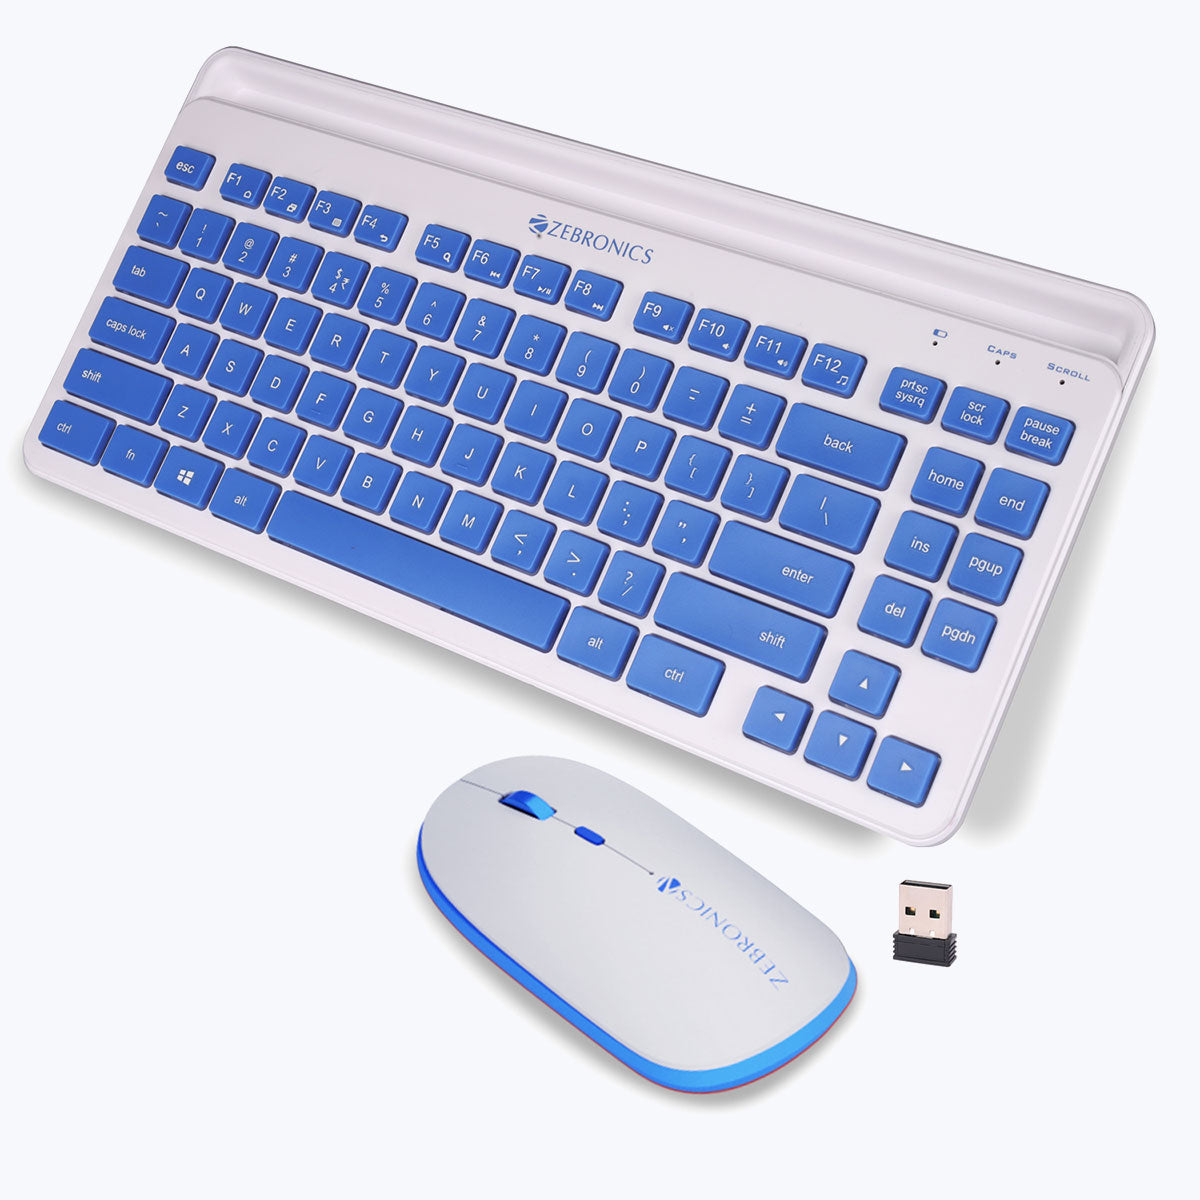 Zeb-Companion 114 - Wireless Keyboard and Mouse Combo - Zebronics